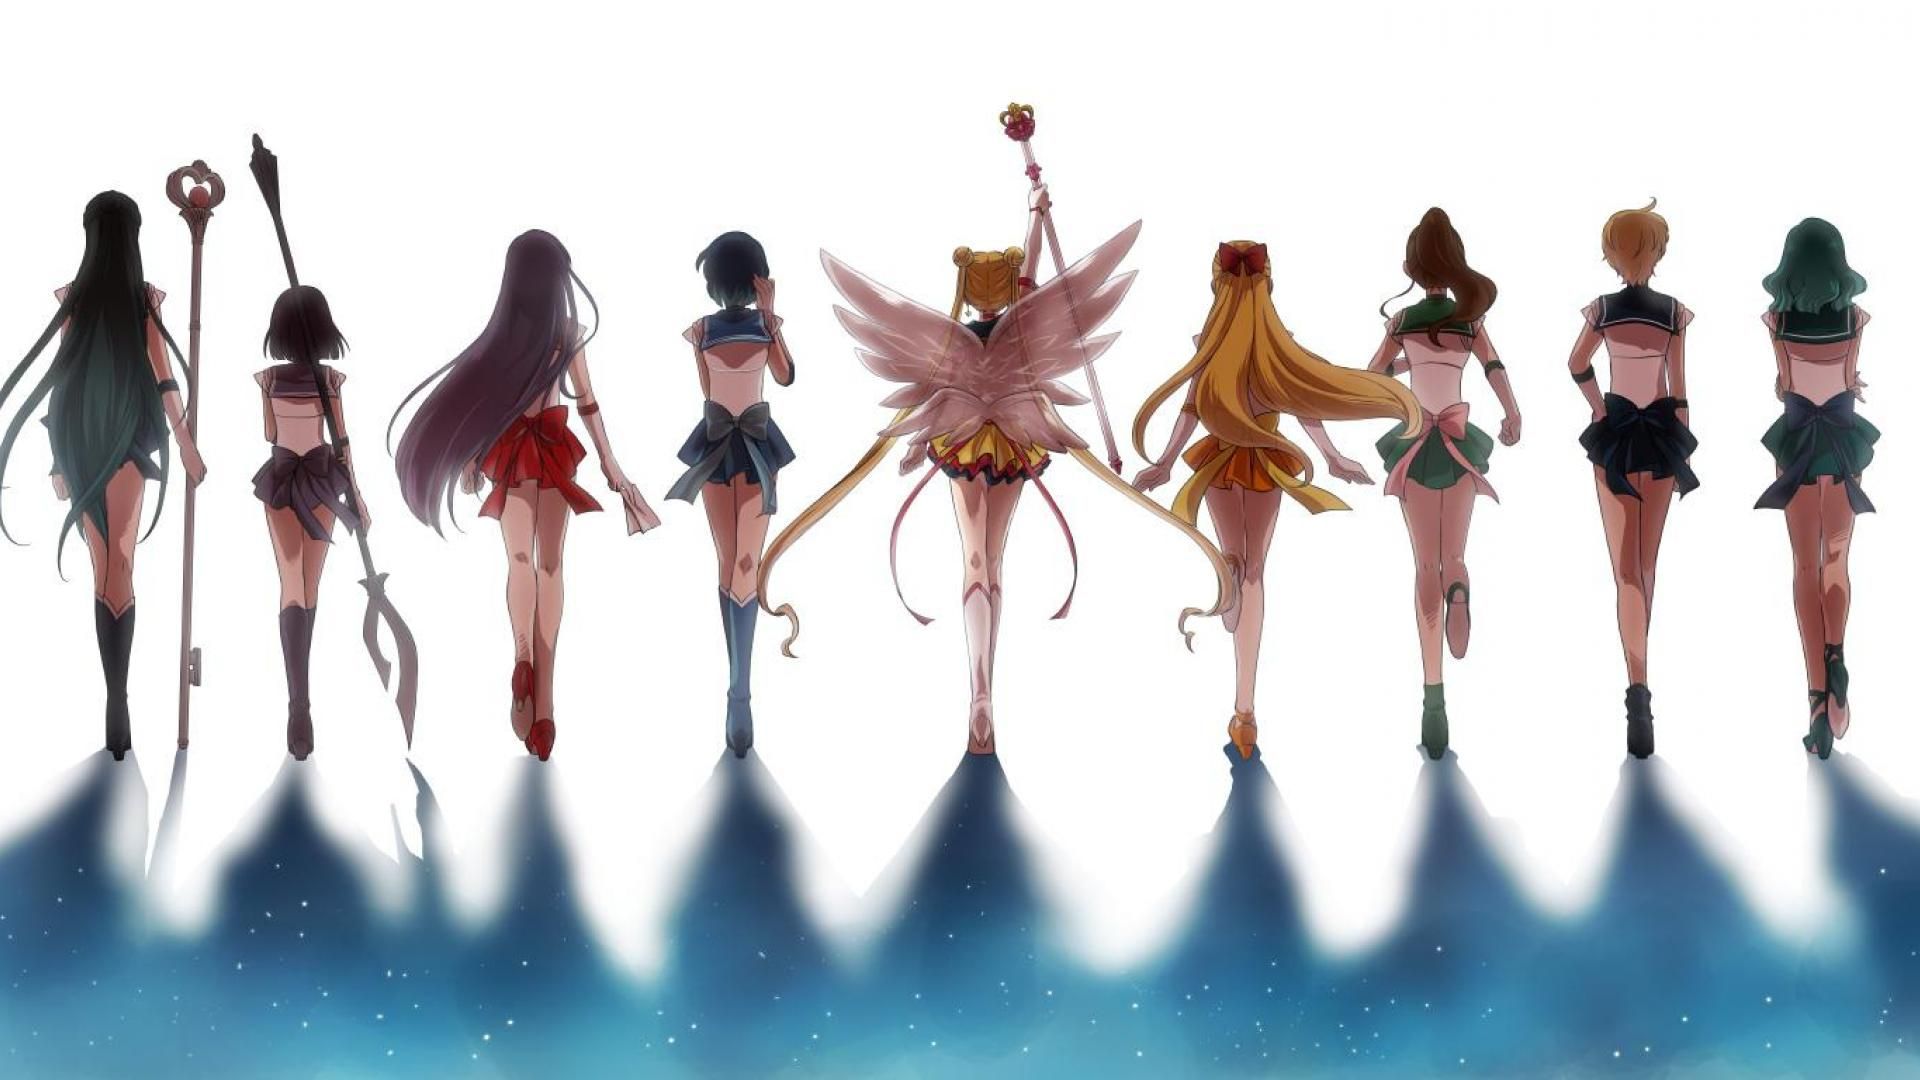 Sailor Moon Wallpaper Desktop. Sailor moon wallpaper, Sailor moon